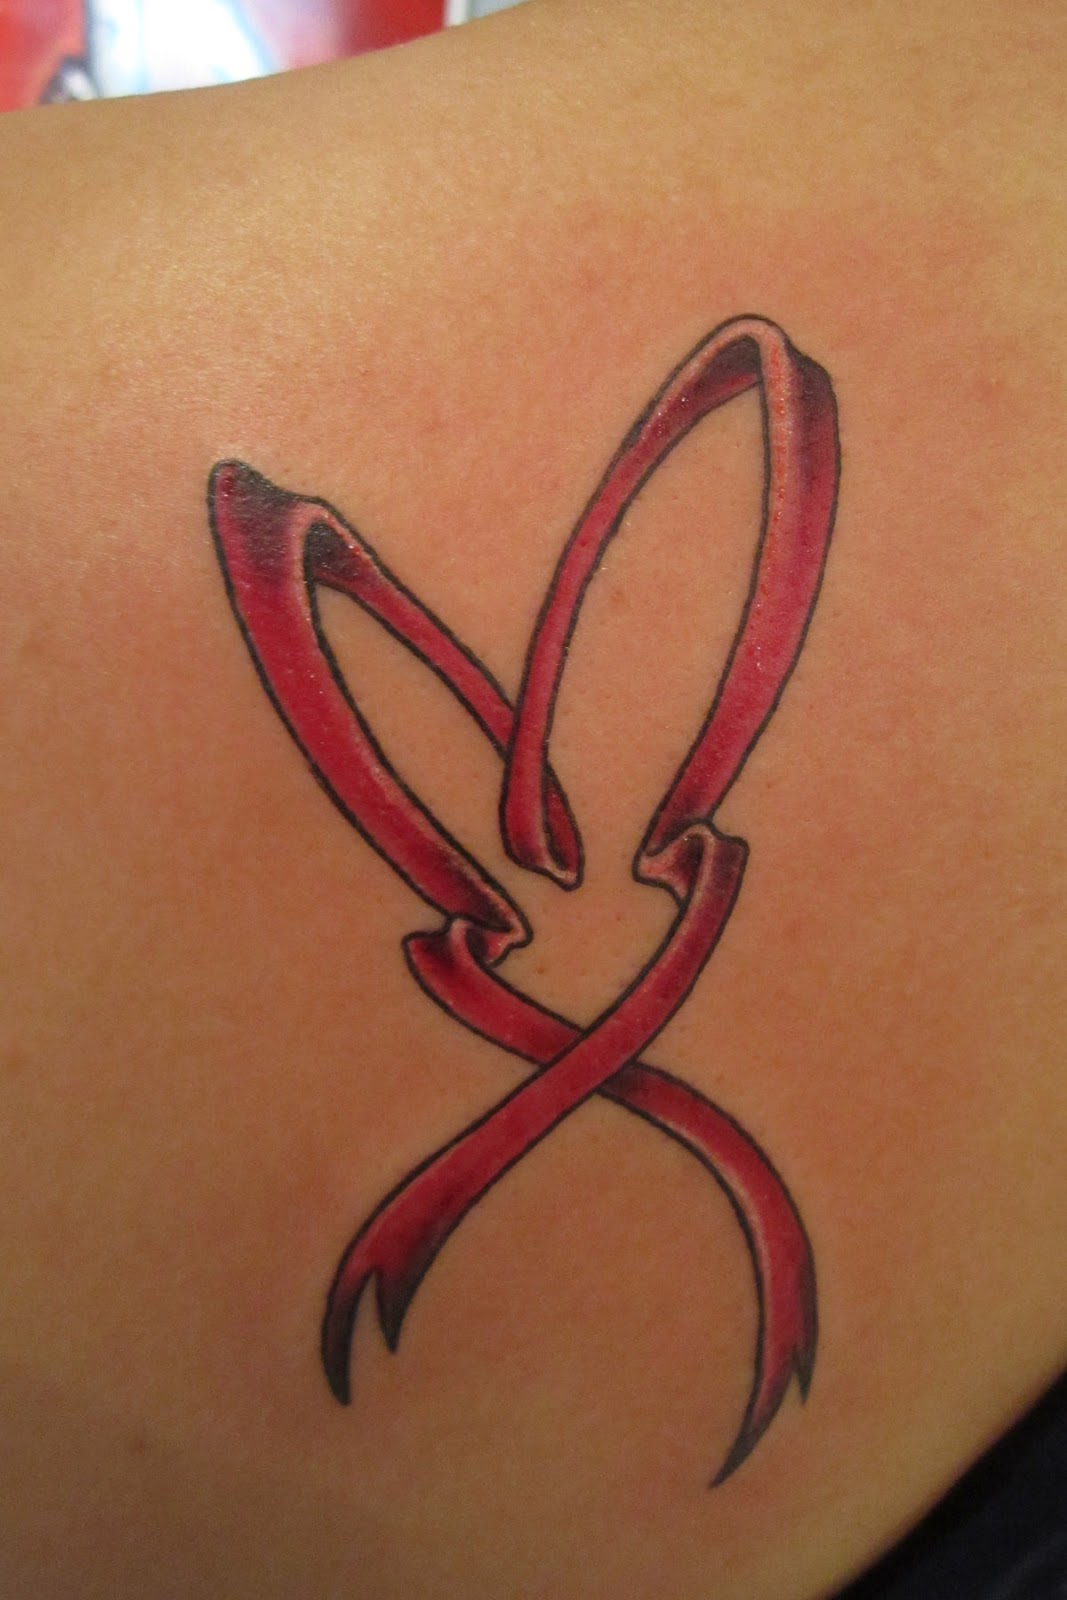 http://2.bp.blogspot.com/-WumS4HFDAjE/T94NRhHMPeI/AAAAAAAAAS0/e3DR6rSQ-Ck/s1600/kyle_mack_breast_cancer_ribbon_tattoo.jpg